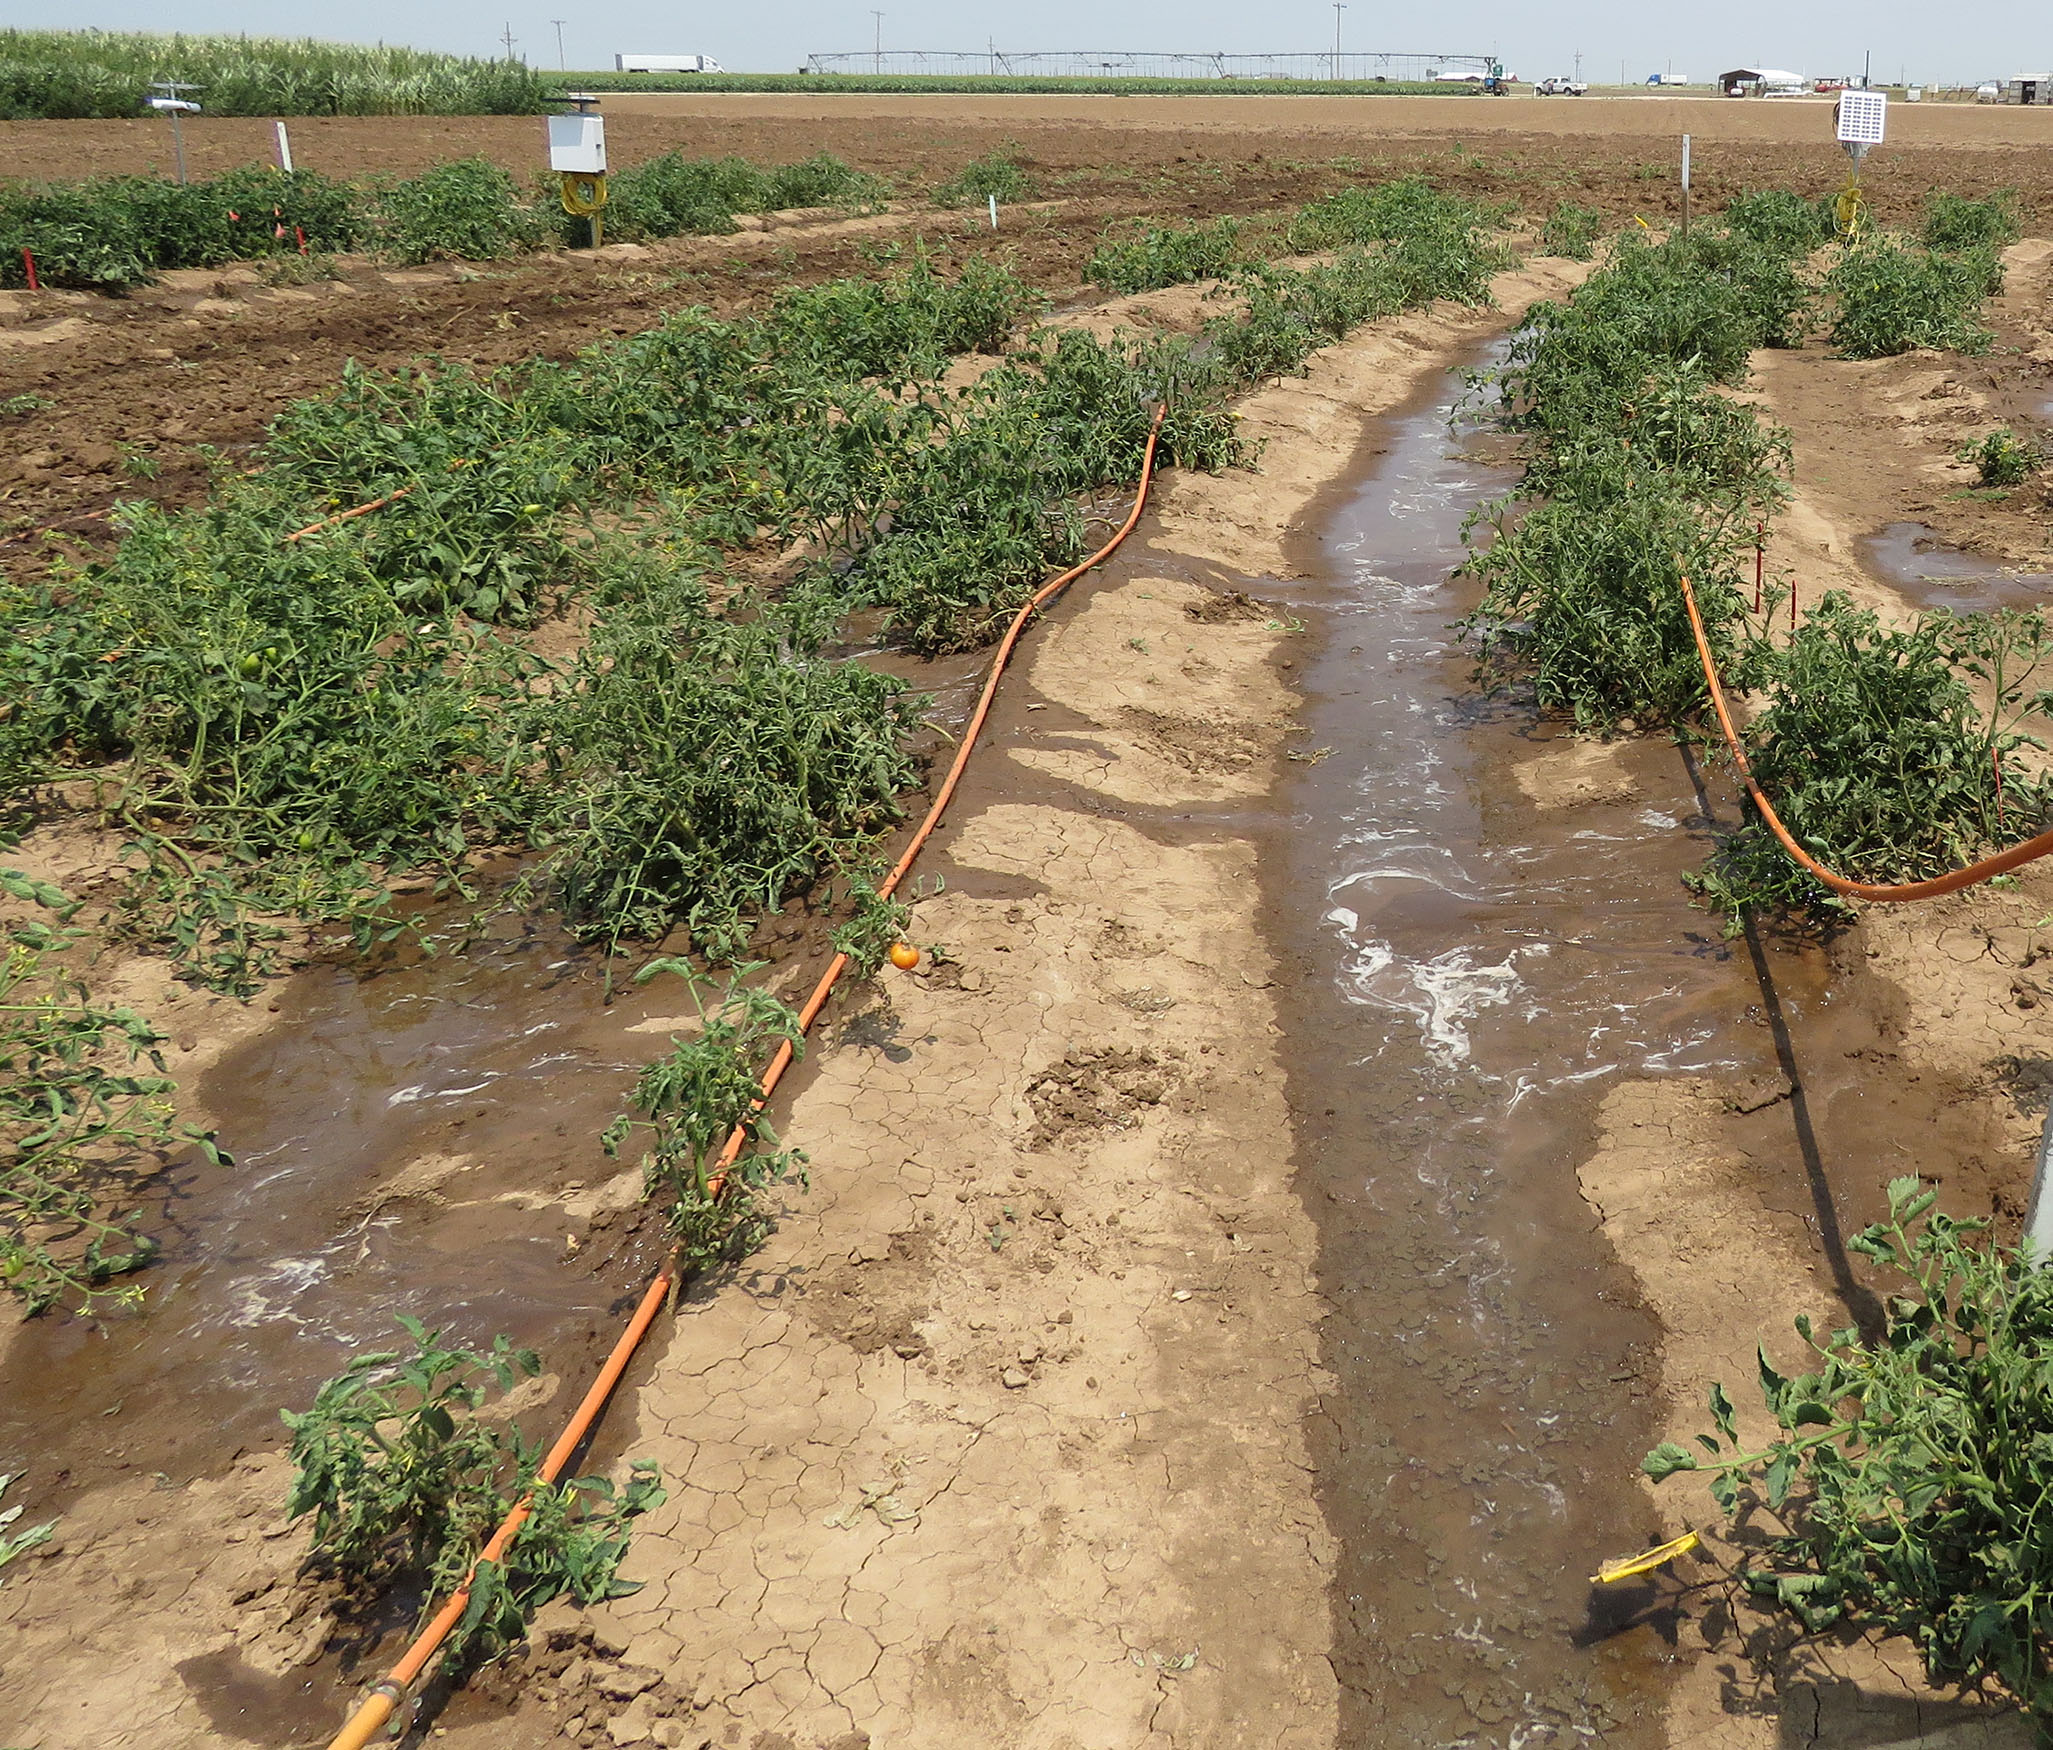 drip irrigation systems